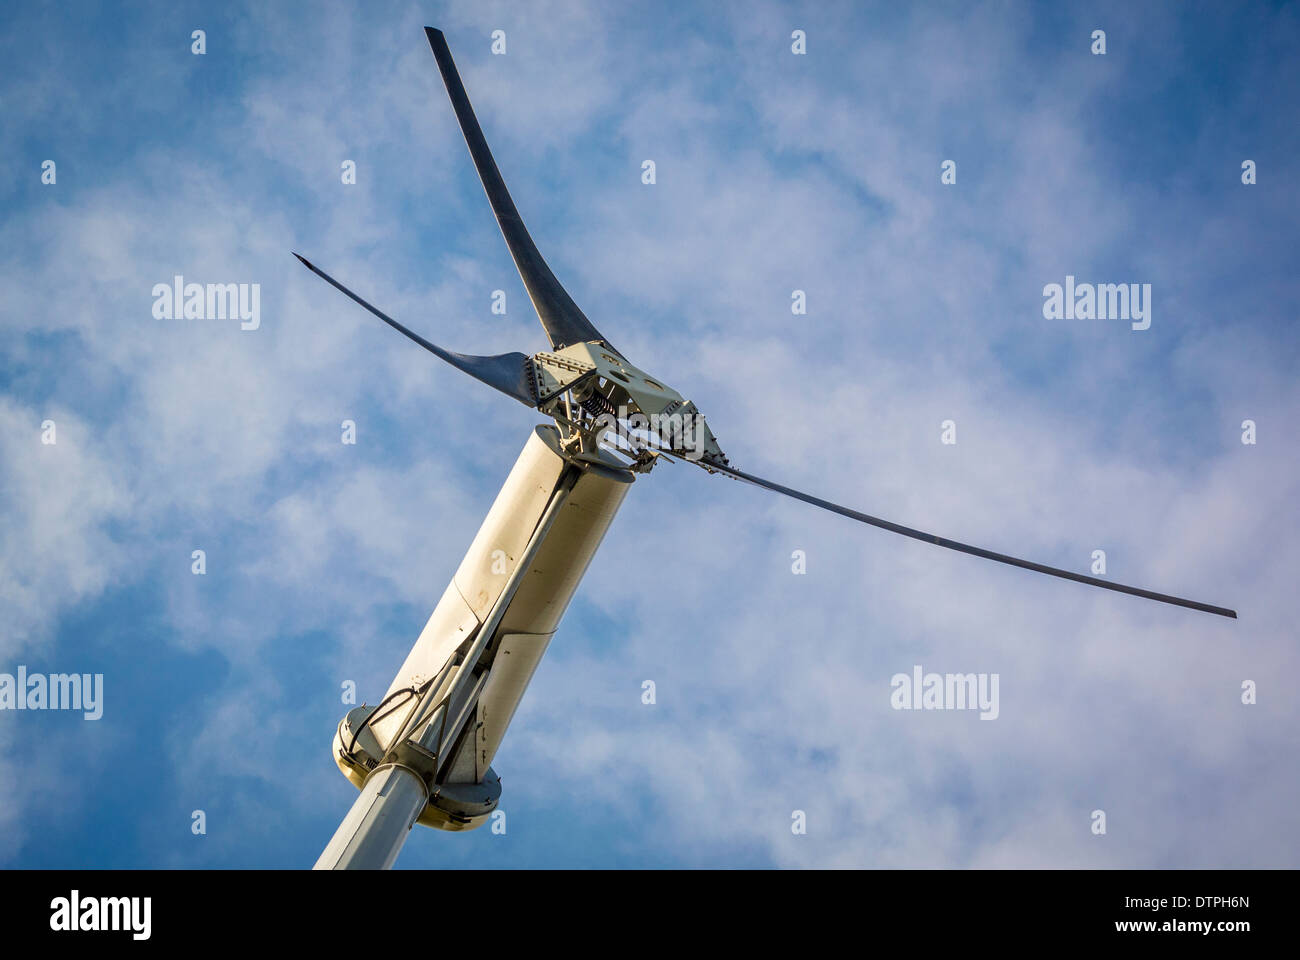 drei Blatt Windkraftanlage gegen blauen Himmel Stockfoto